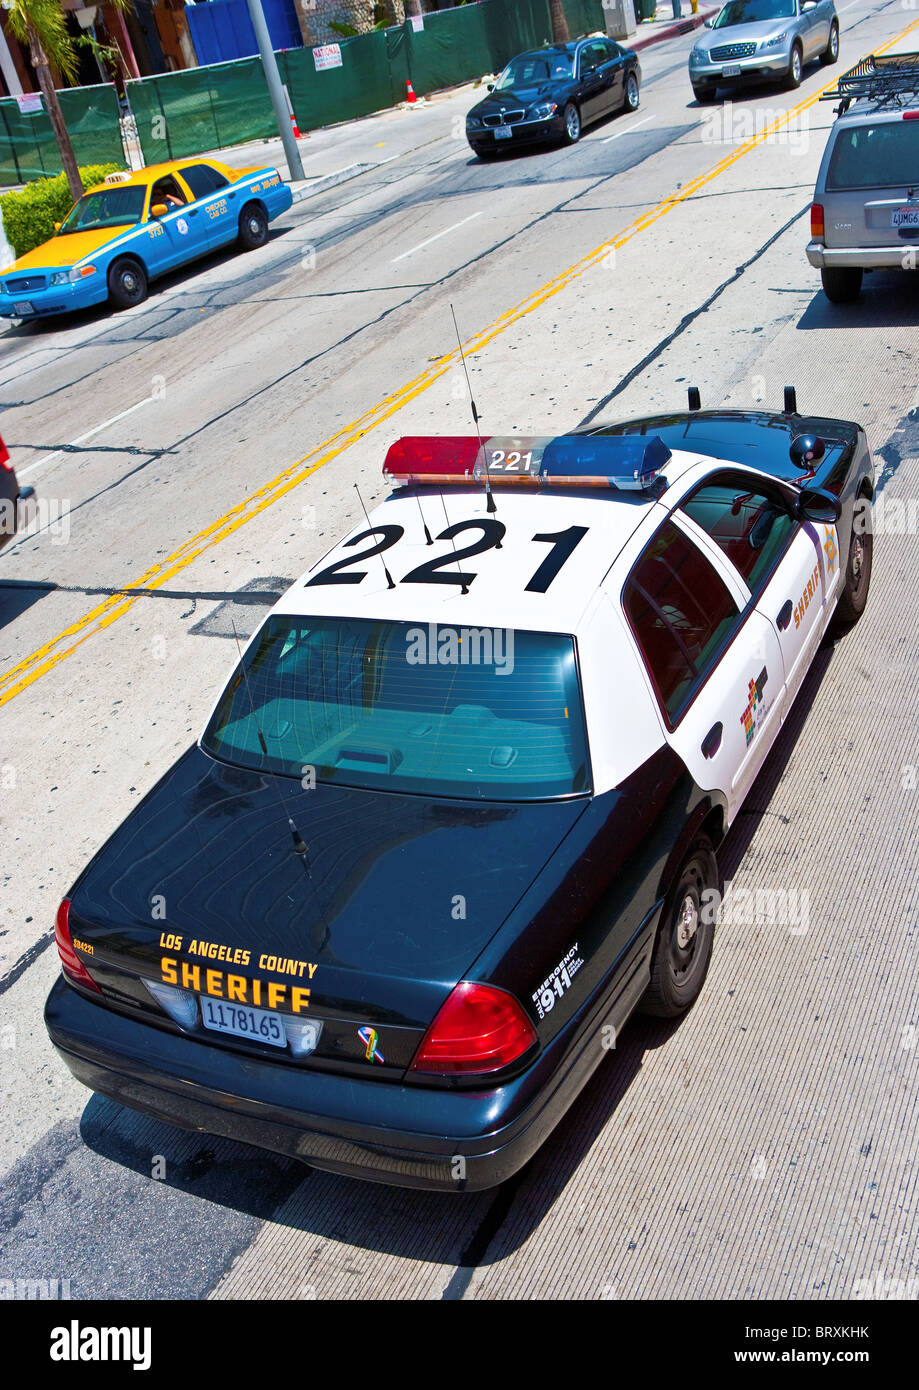 American police car. Los Angeles county sheriff. California, USA Stock Photo